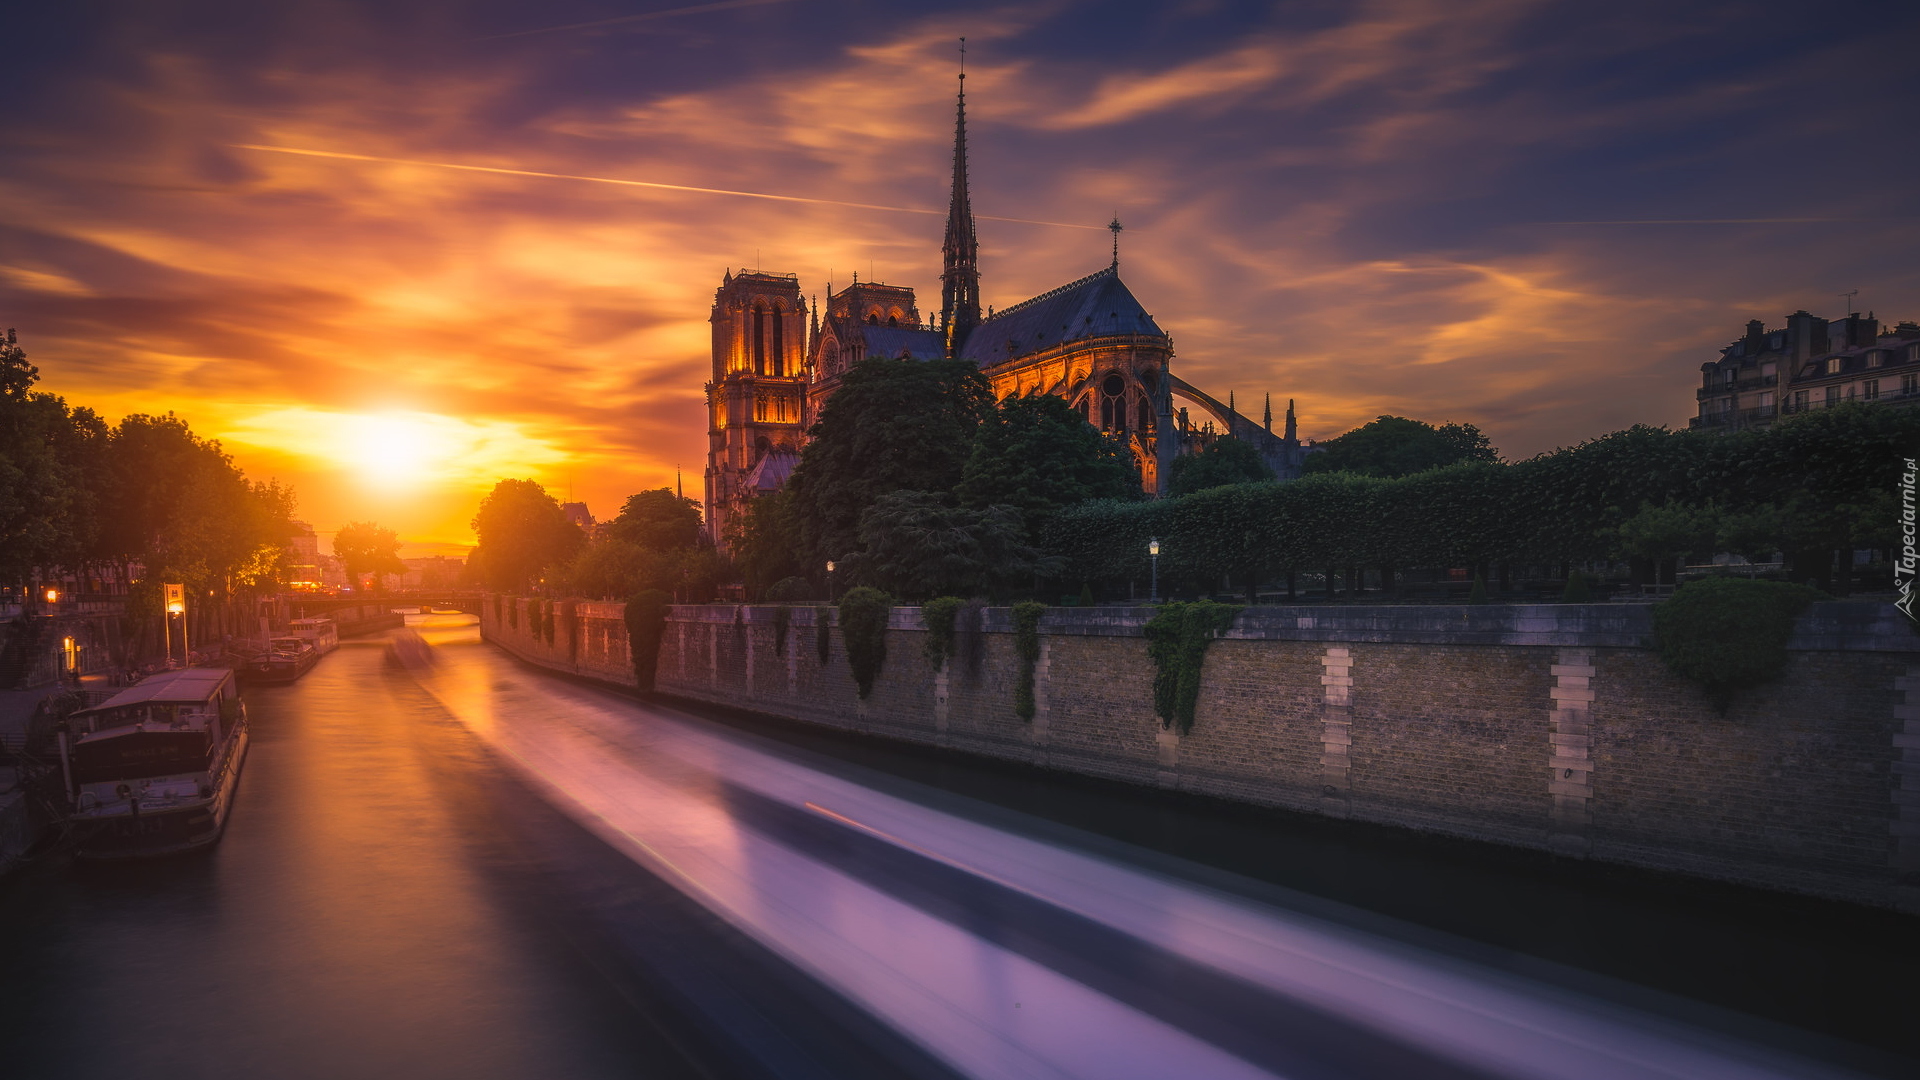 Katedra Notre Dame, Rzeka Sekwana, Zachód słońca, Paryż, Francja